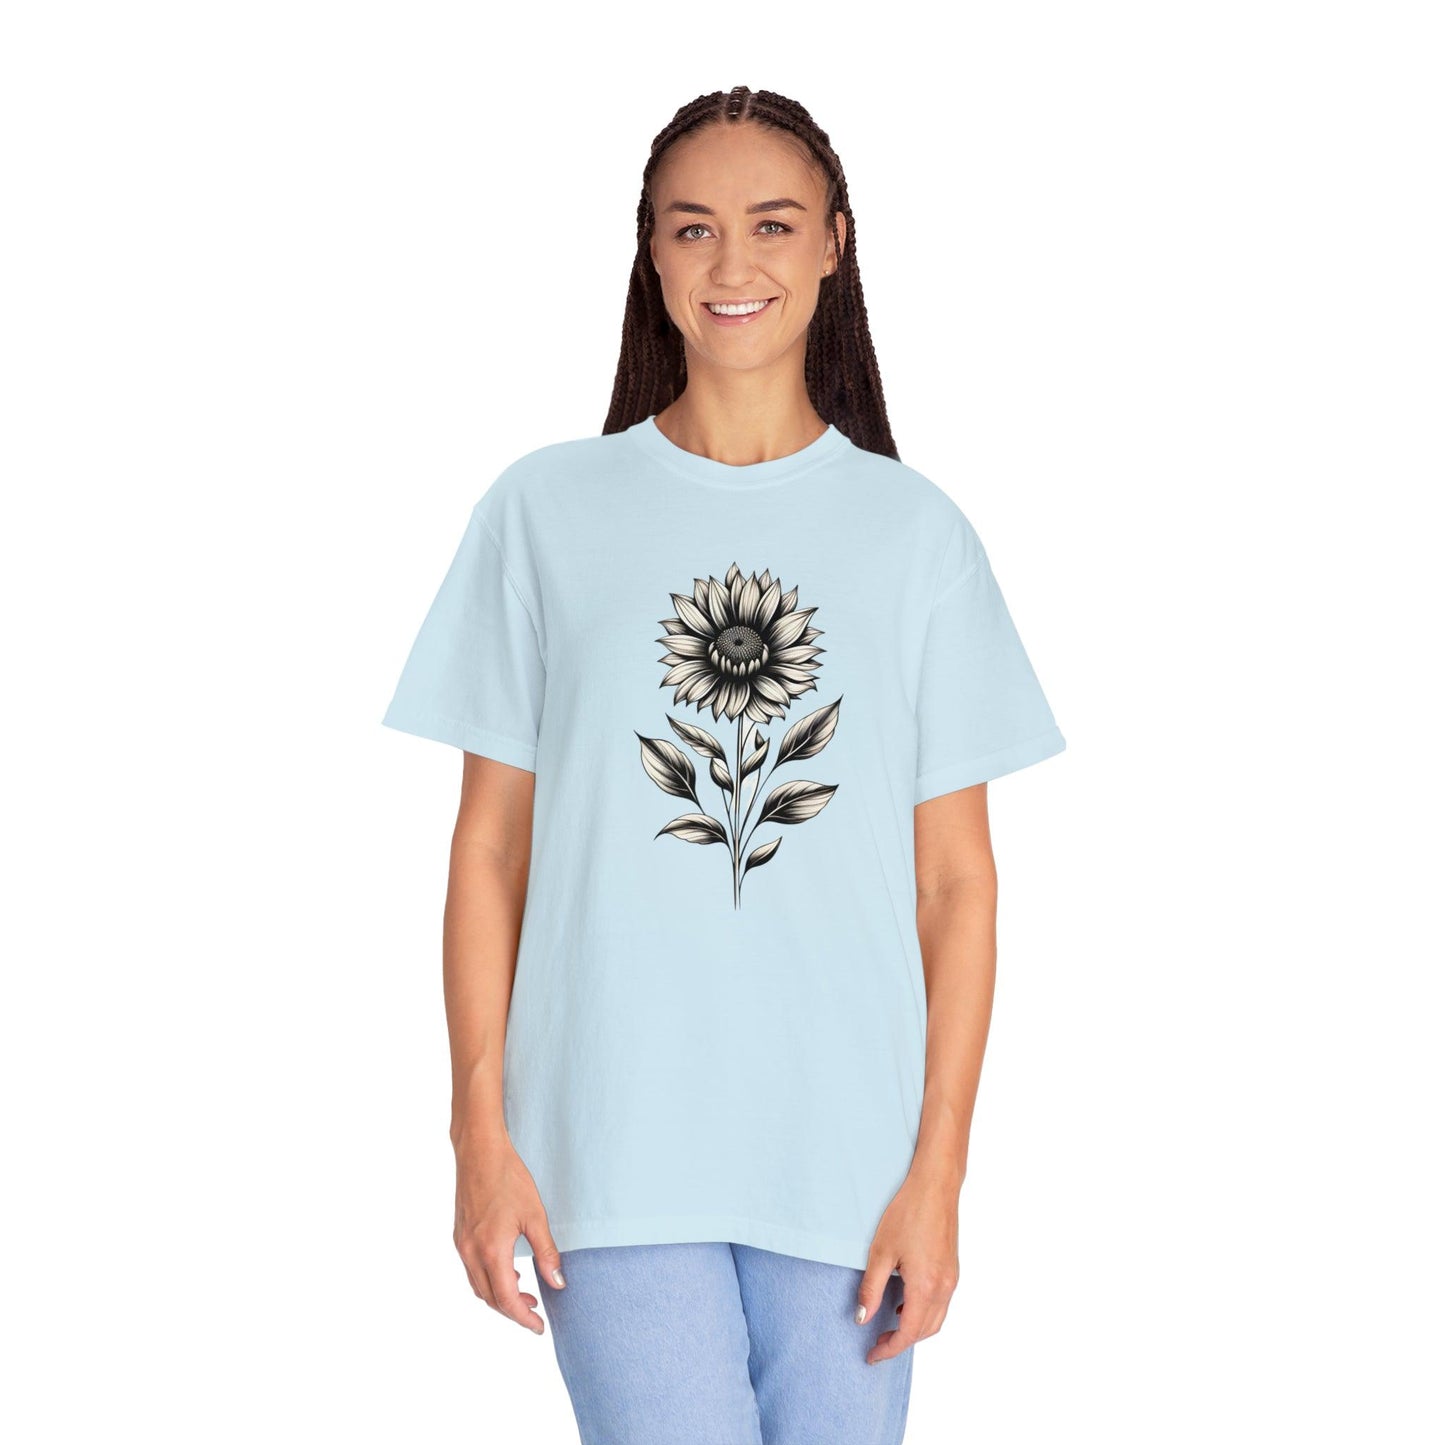 Sunflower Shirt Flower Shirt Aesthetic, Floral Graphic Tee Floral Shirt Flower T-shirt, Wild Flower Shirt Gift For Her Wildflower T-shirt